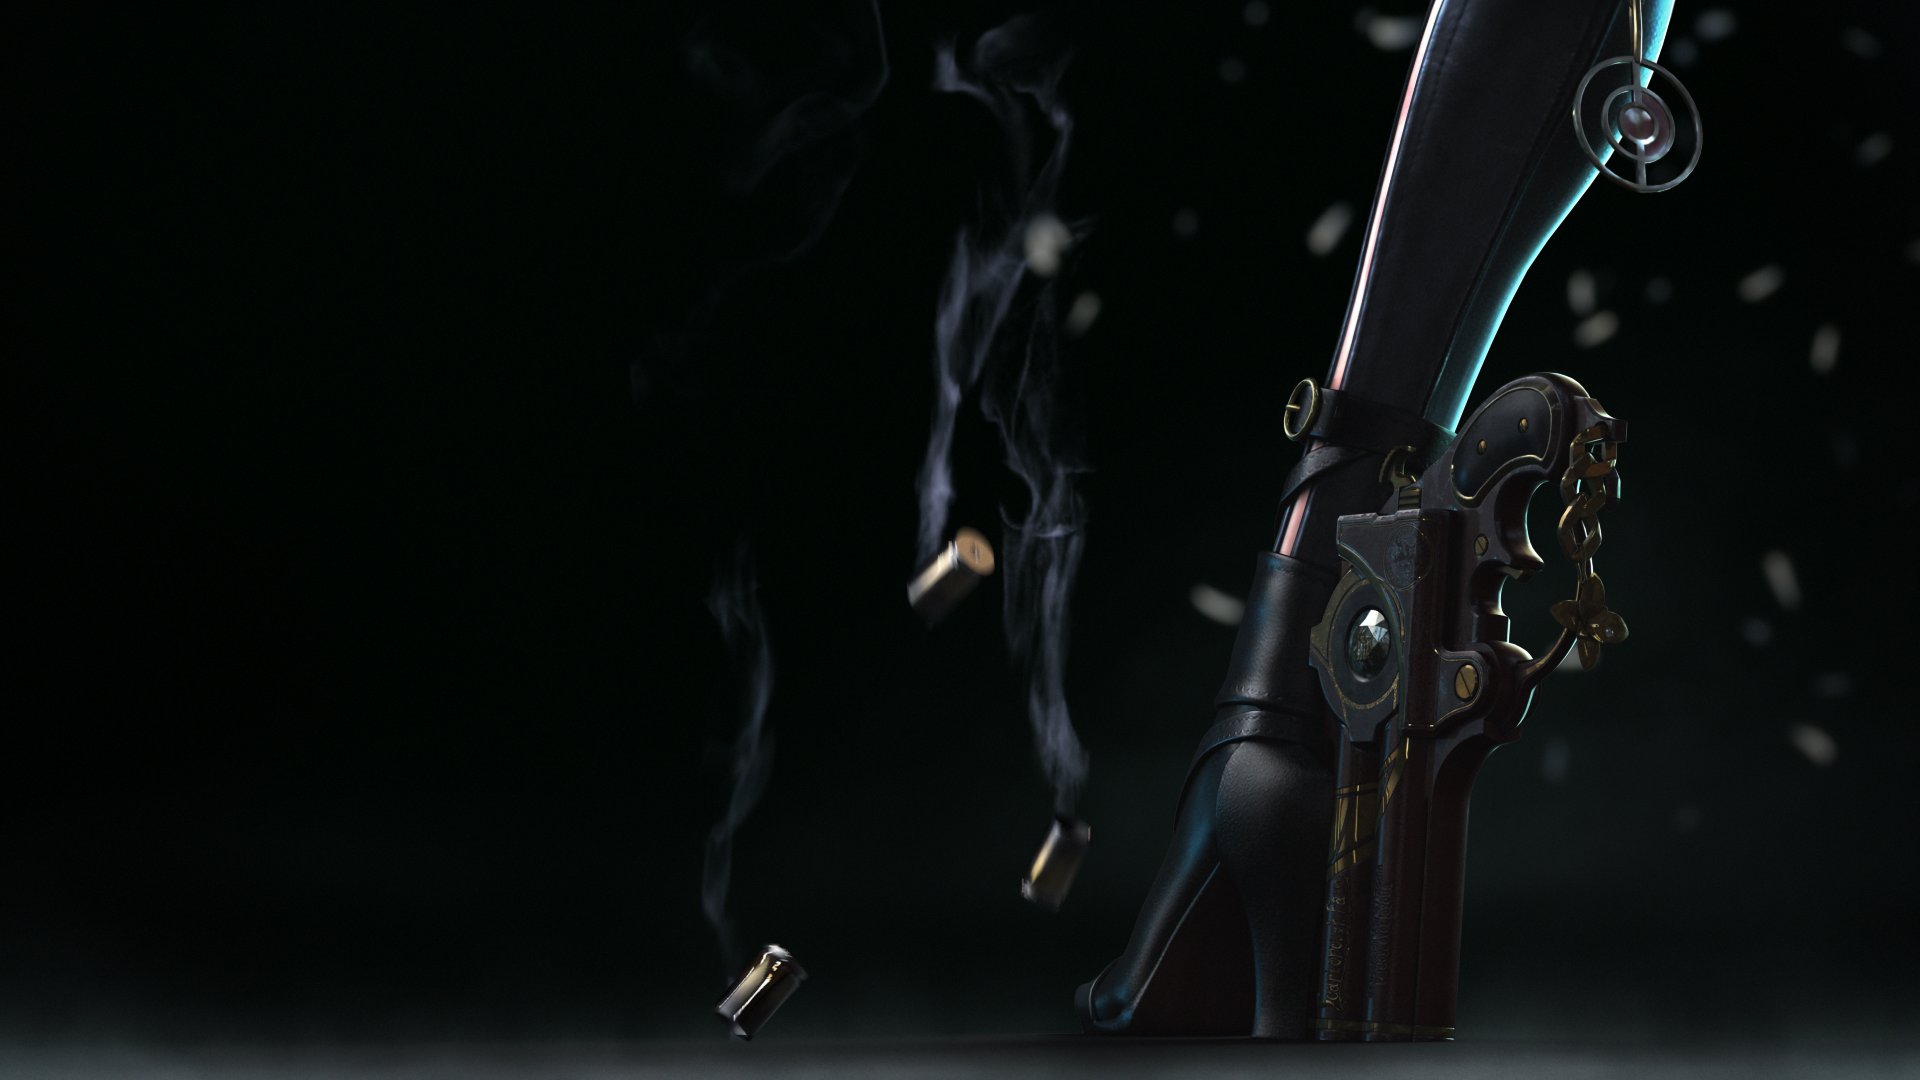 Heel Gun And Smoking Bullets   Action Games Wallpaper Image featuring